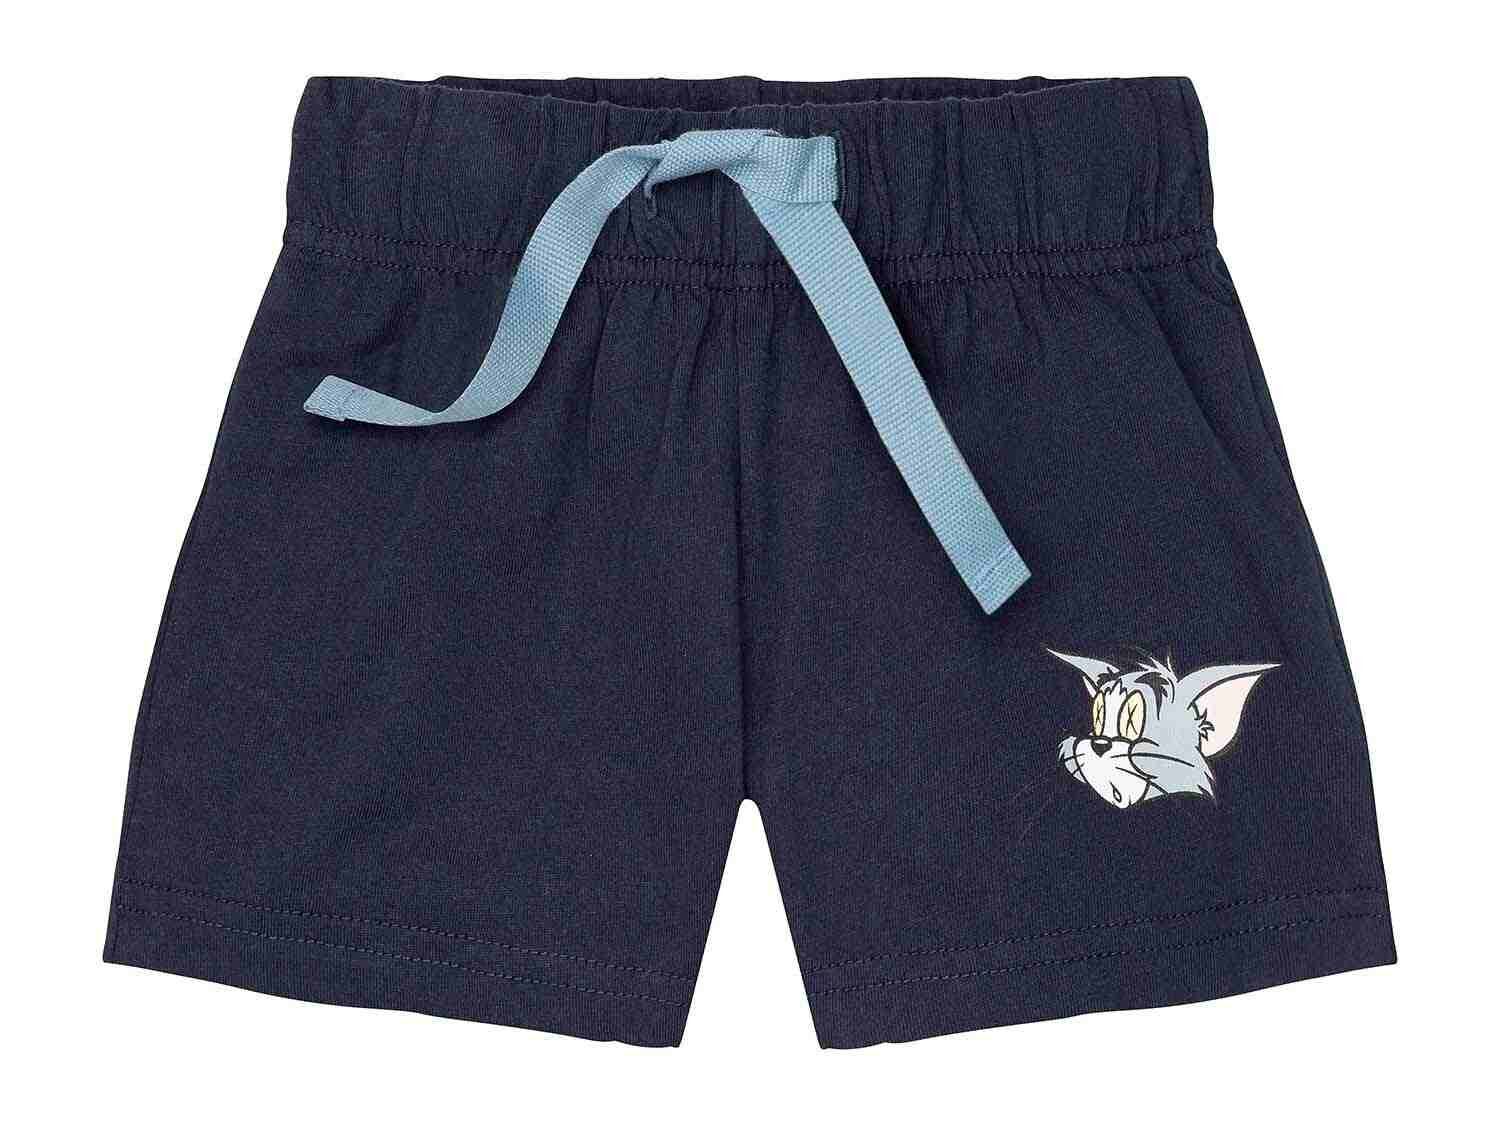 Pantalón corto infantil Tom & Jerry